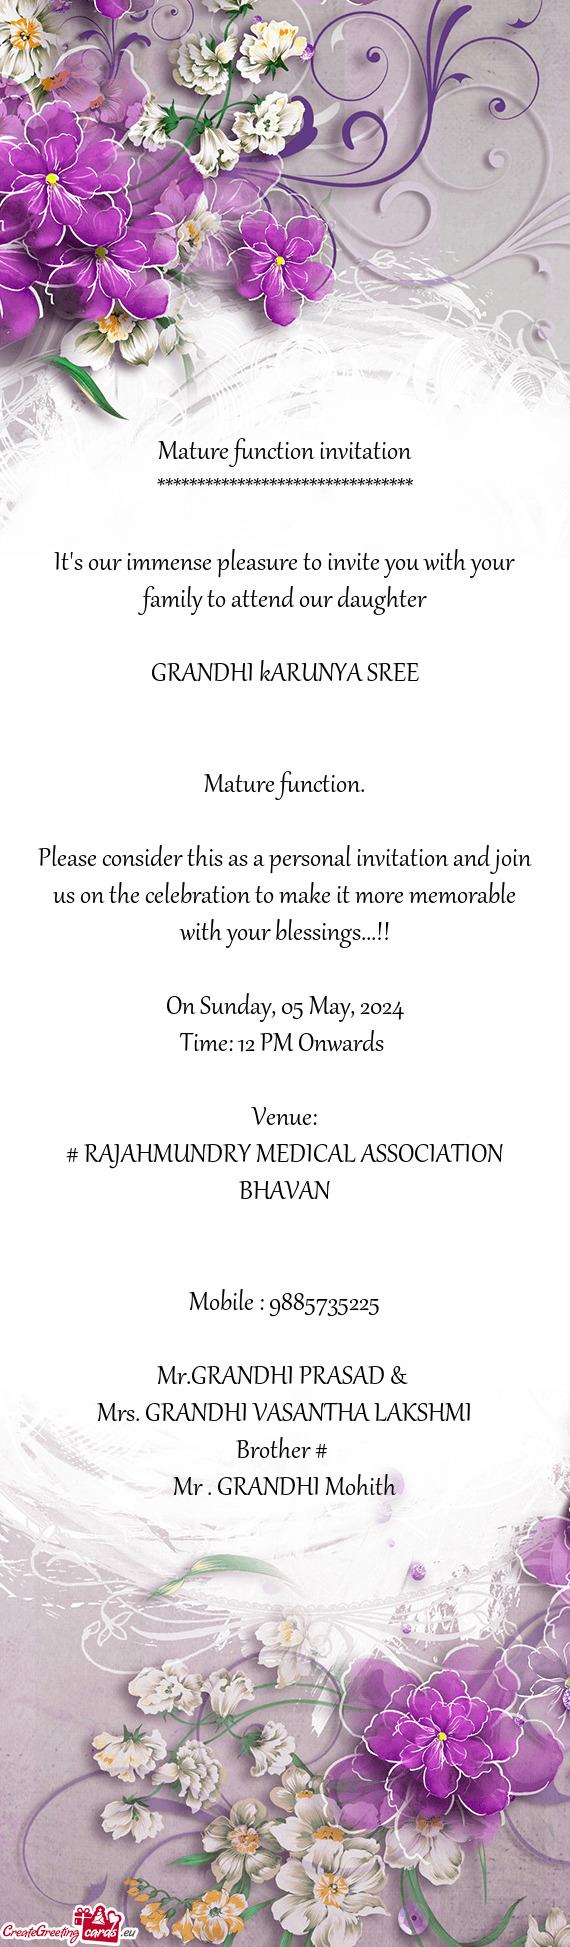 # RAJAHMUNDRY MEDICAL ASSOCIATION BHAVAN